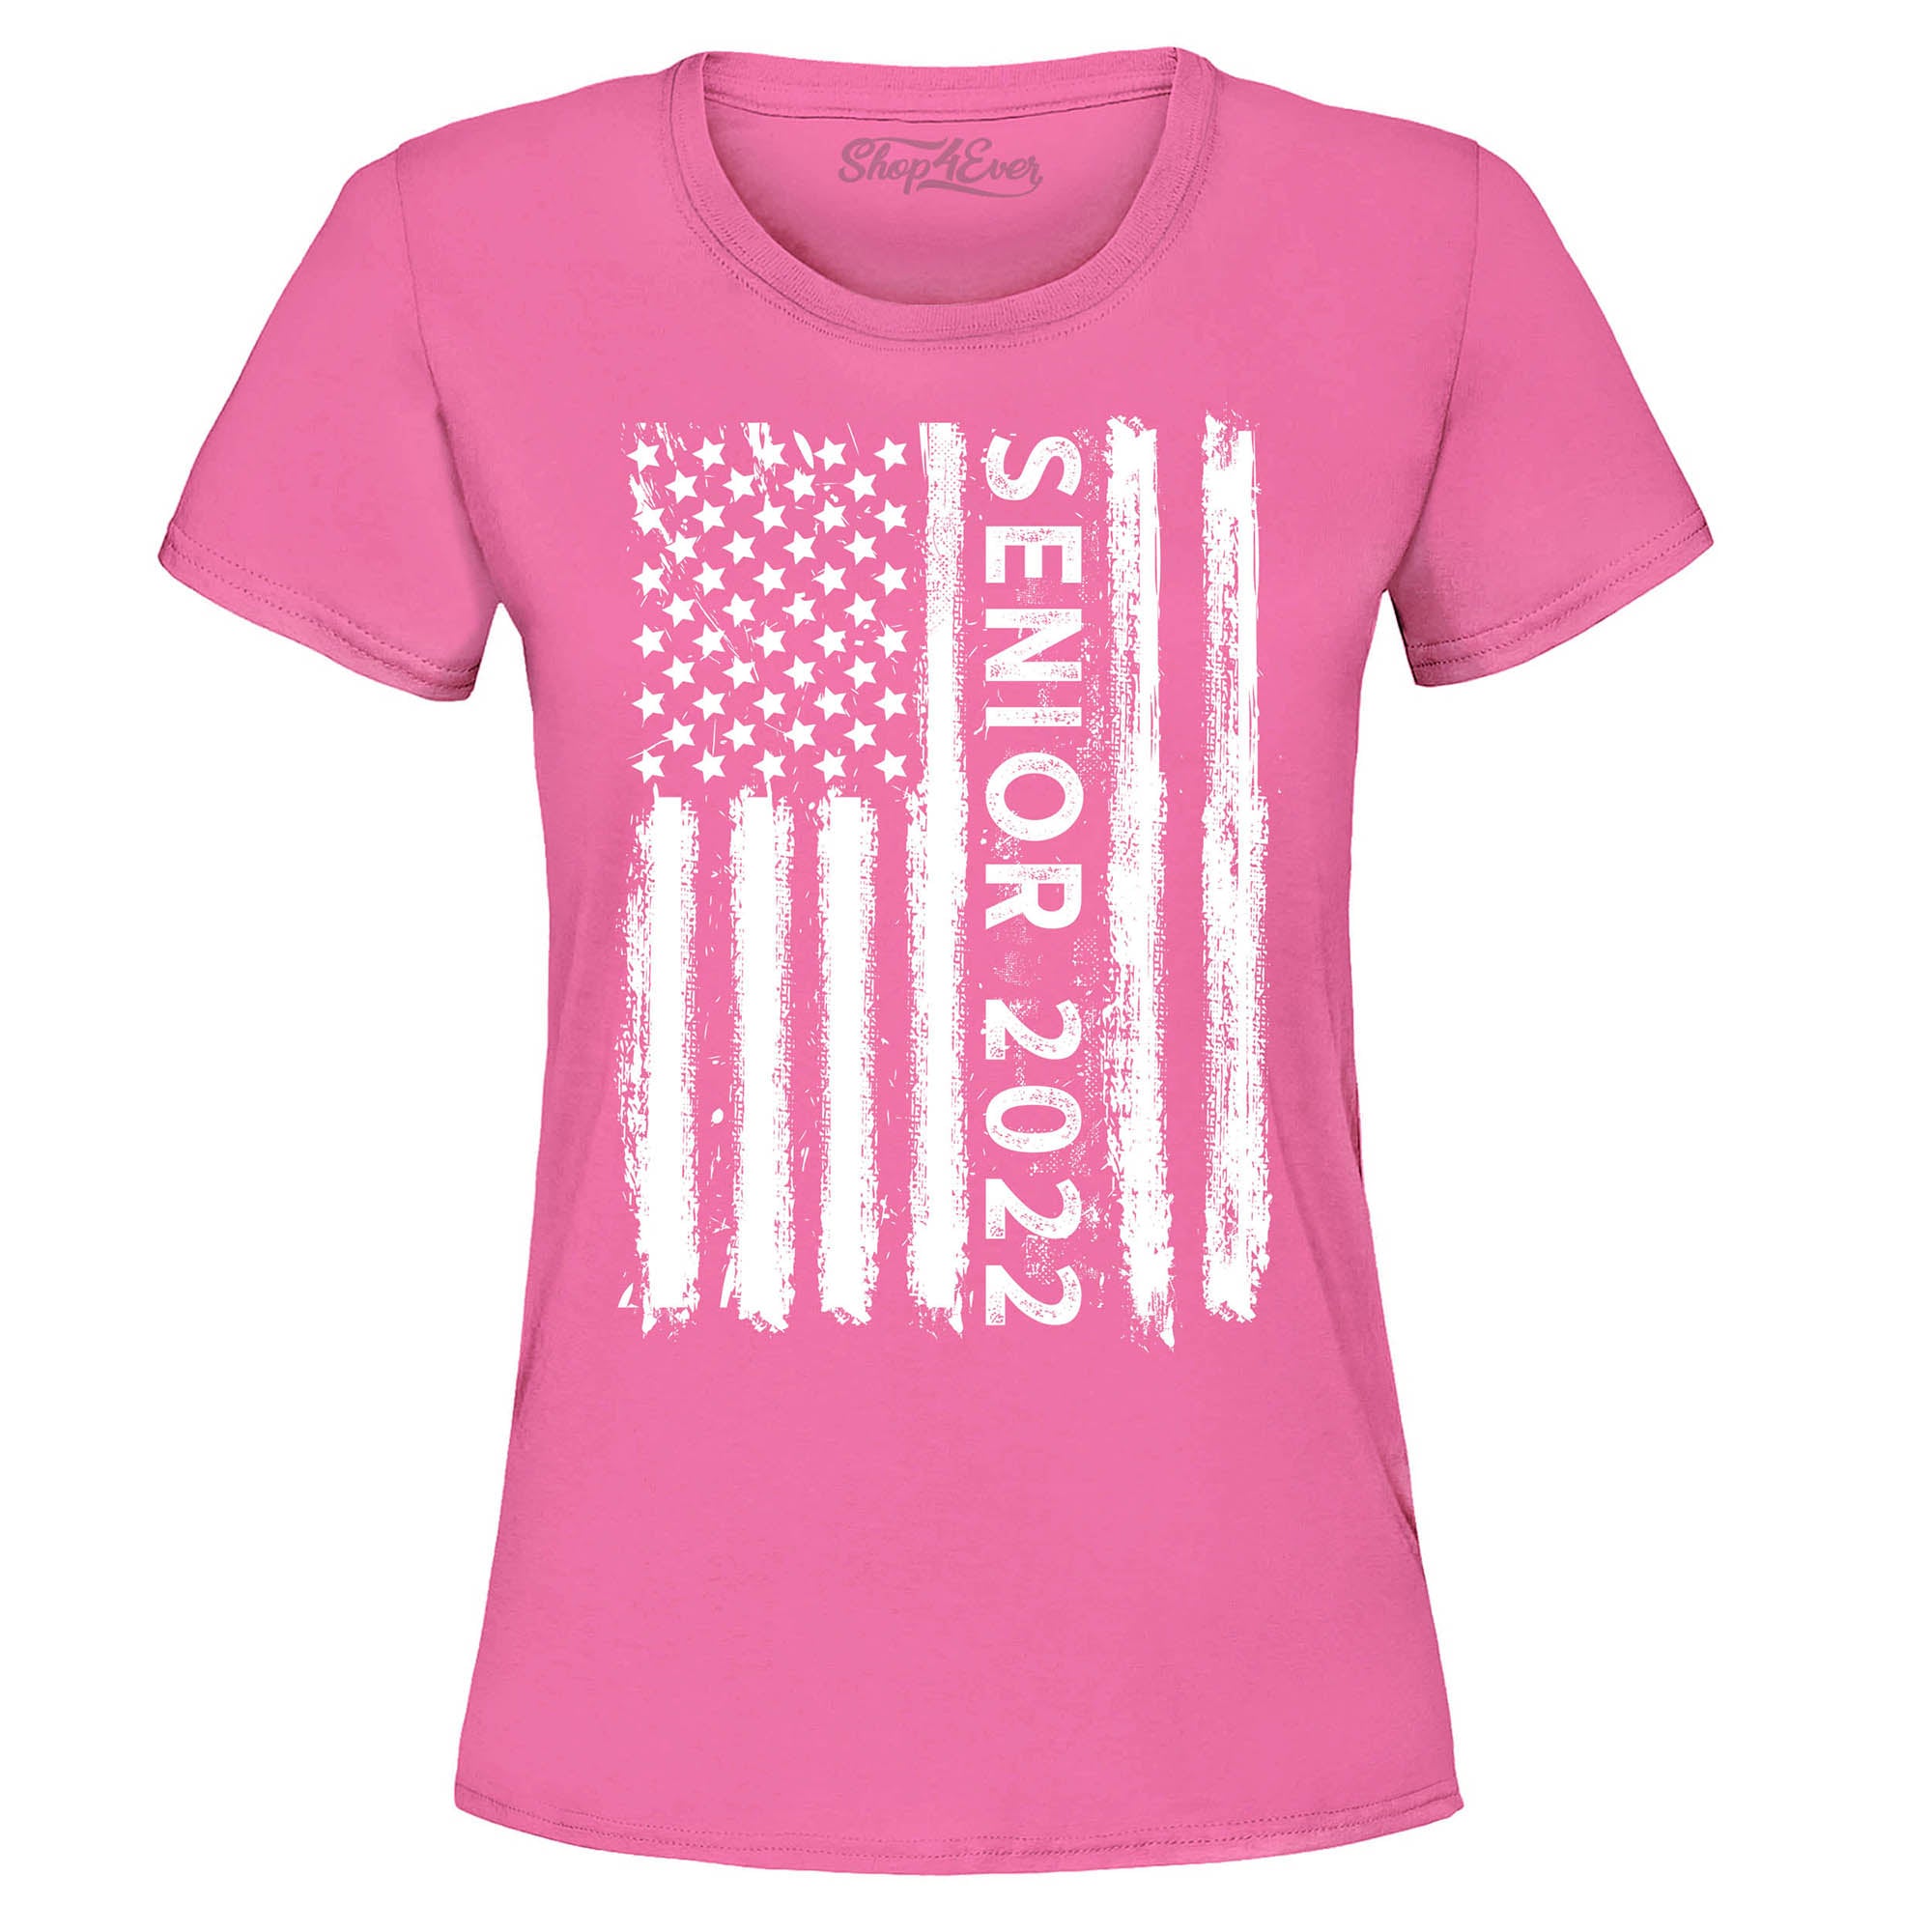 Senior 2022 USA American Flag Graduation Women's T-Shirt